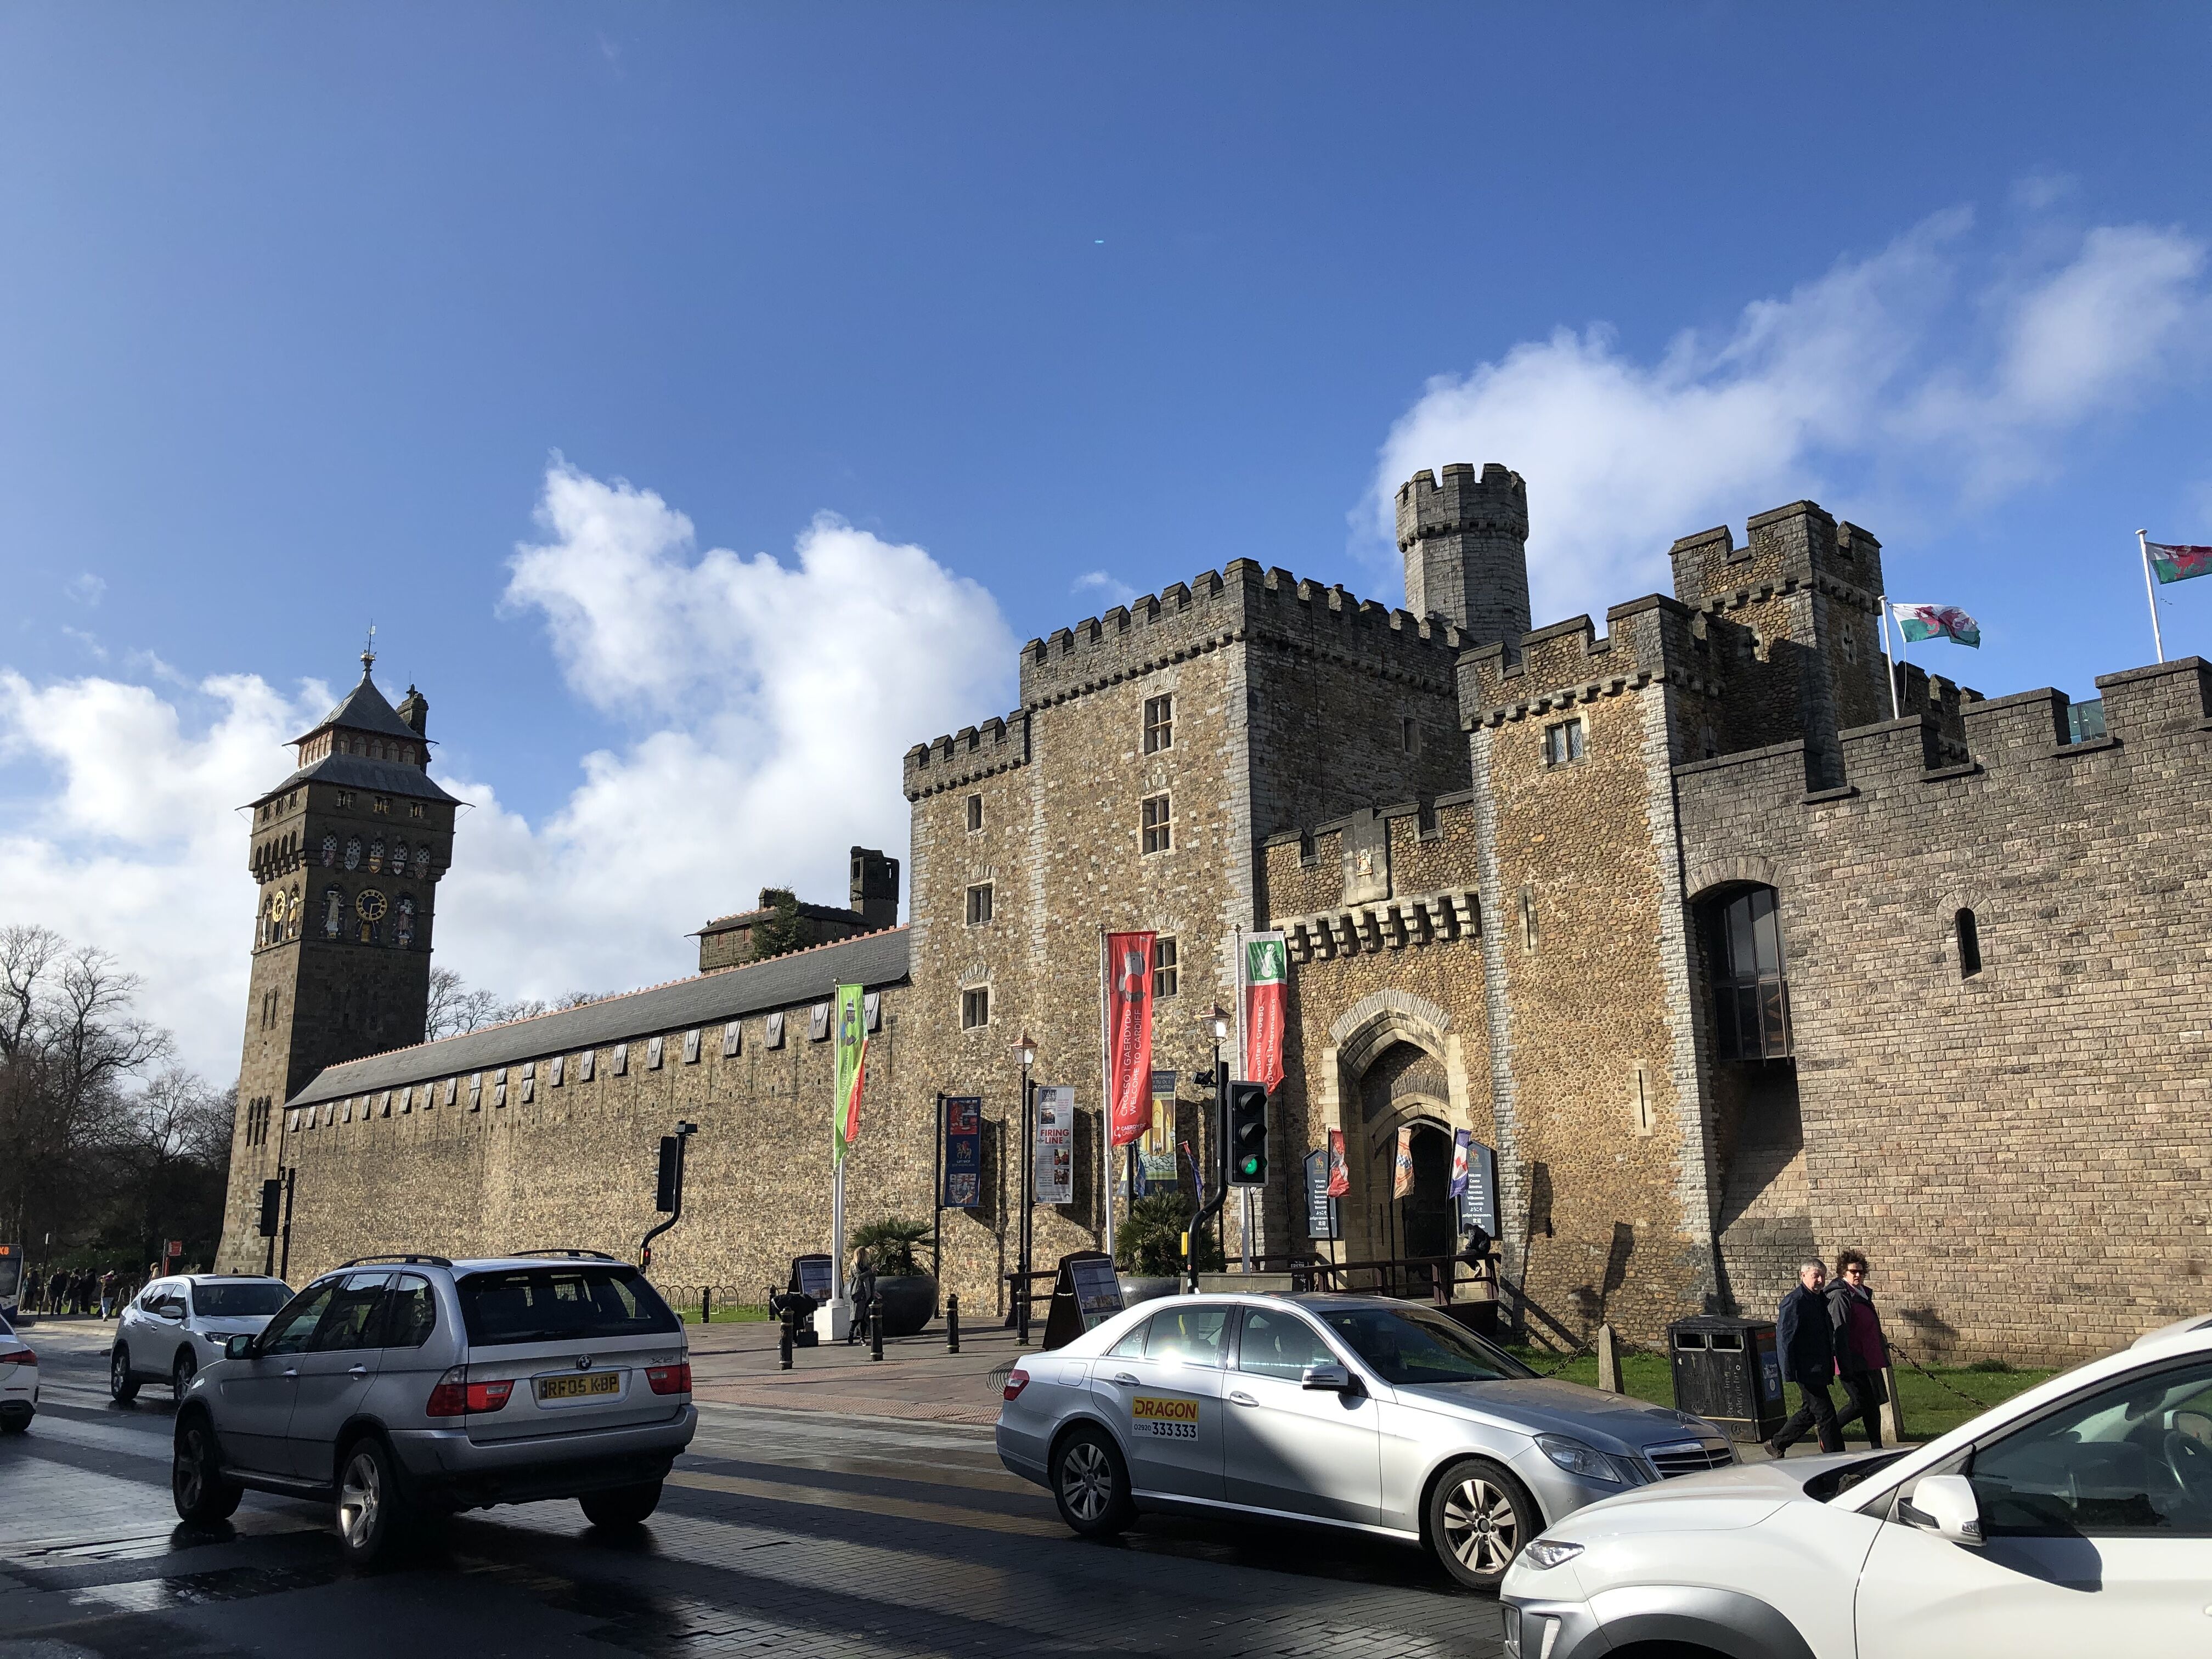 Cardiff Castle in the City Centre